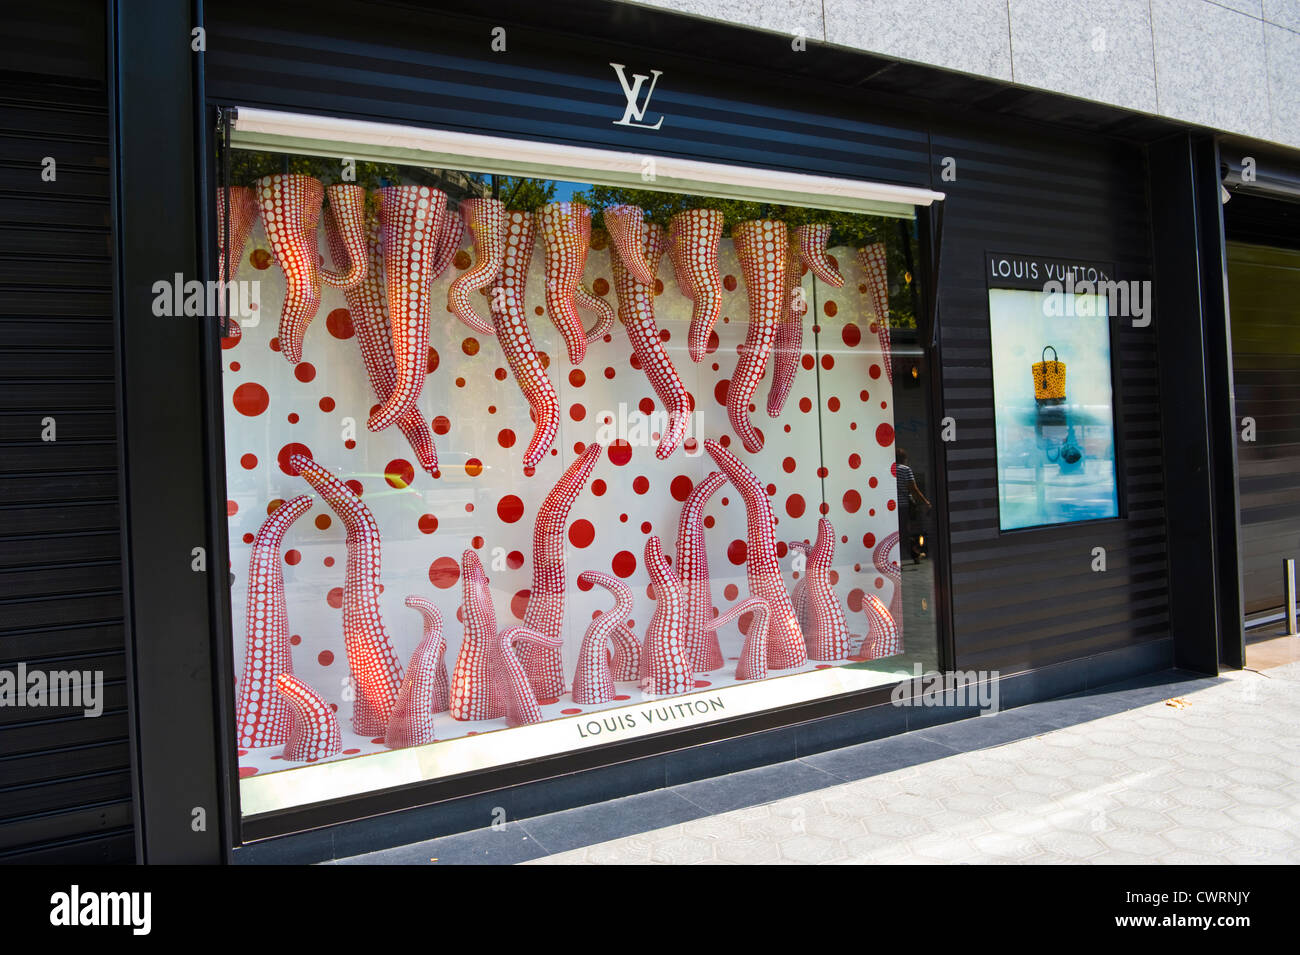 Exterior of Louis Vuitton store with original artwork window